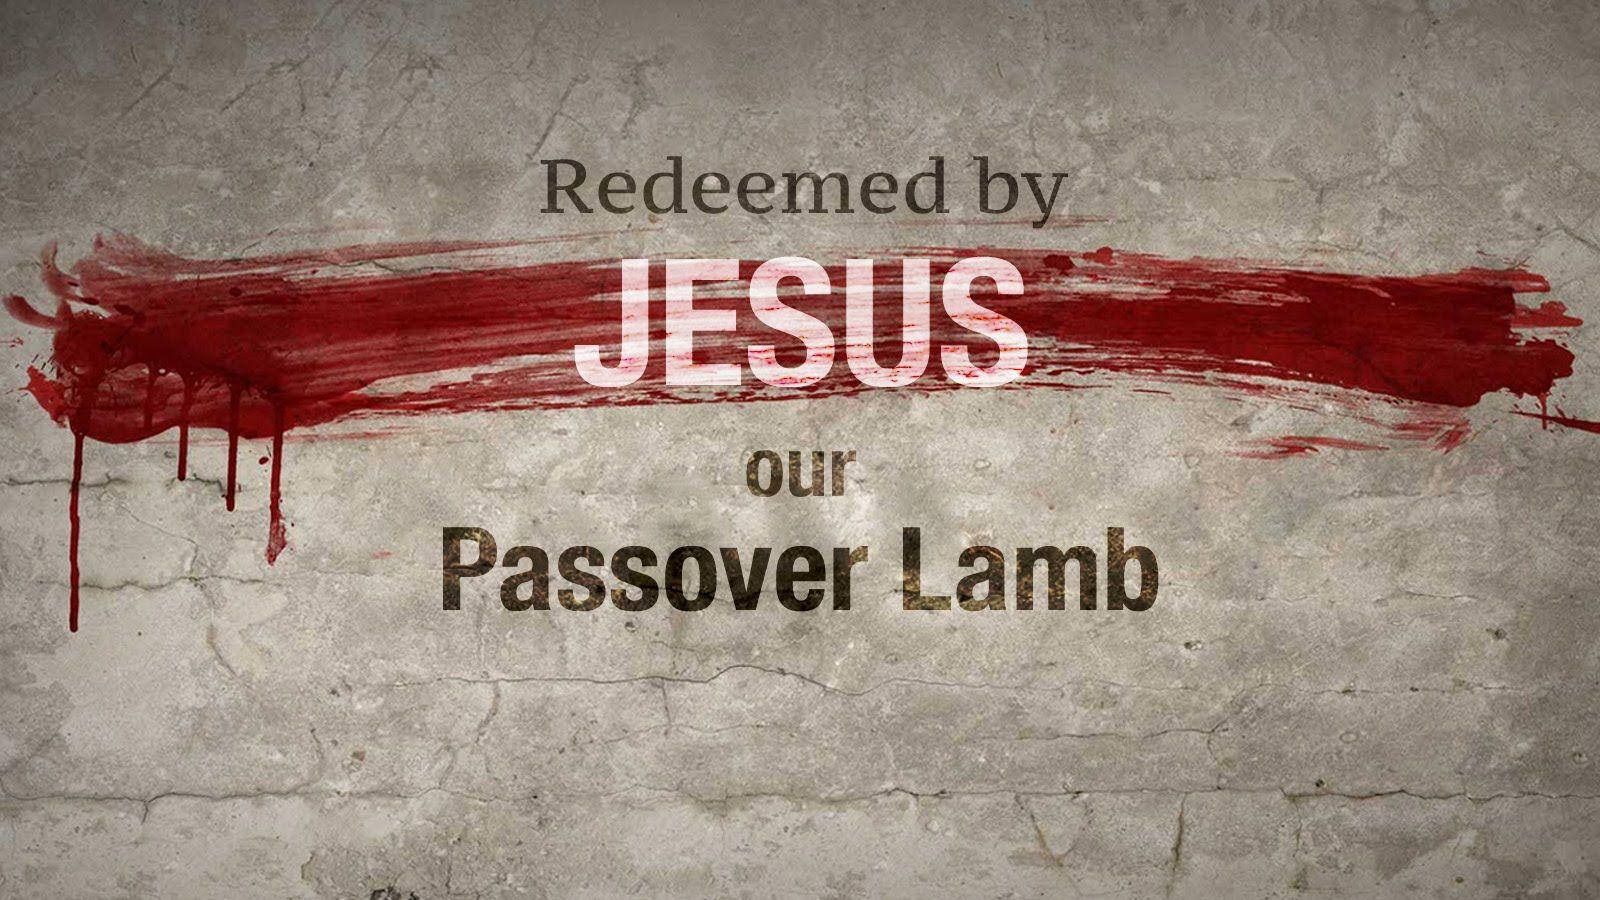 Passover Lamb Jesus Background